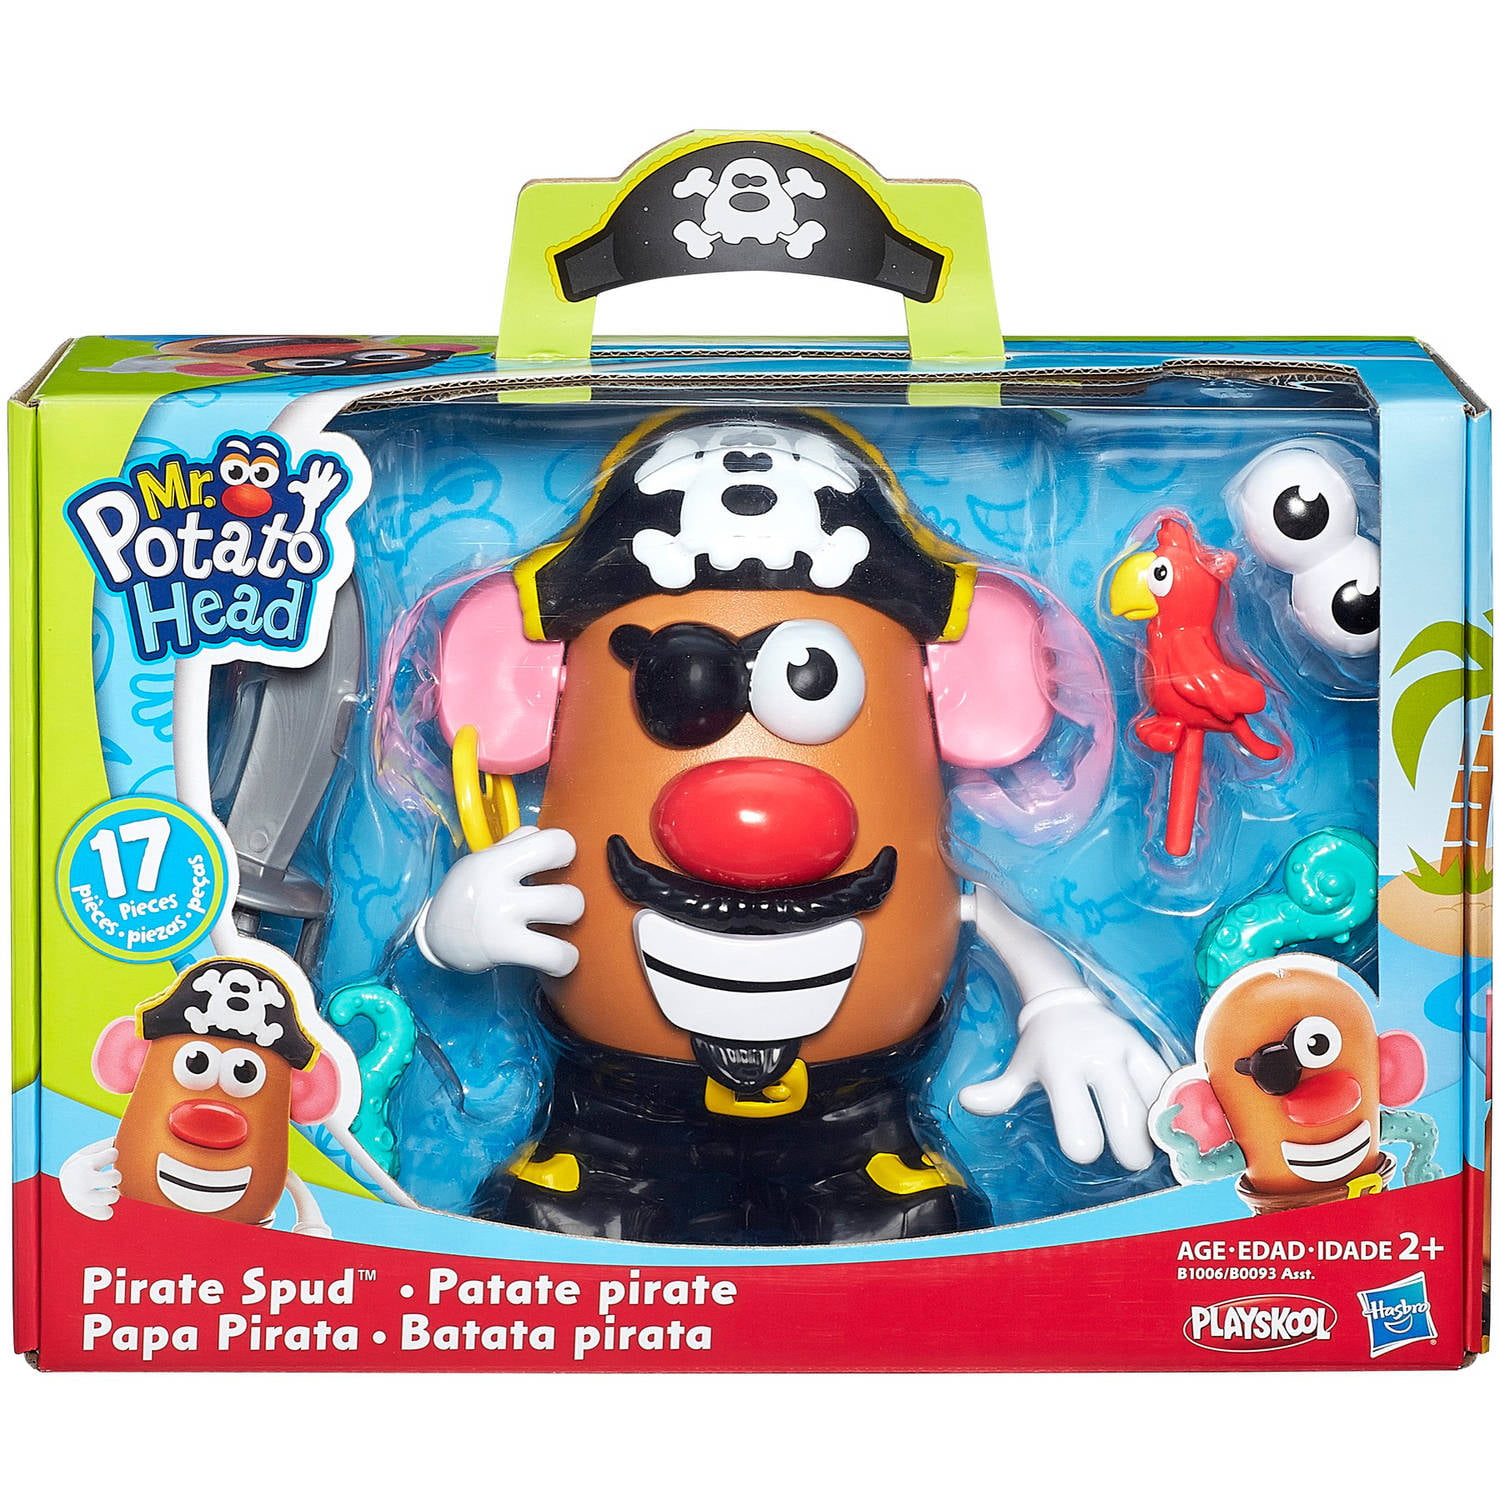 Potato Head Pirate Spud Figure Playskool Mr for sale online B1006 